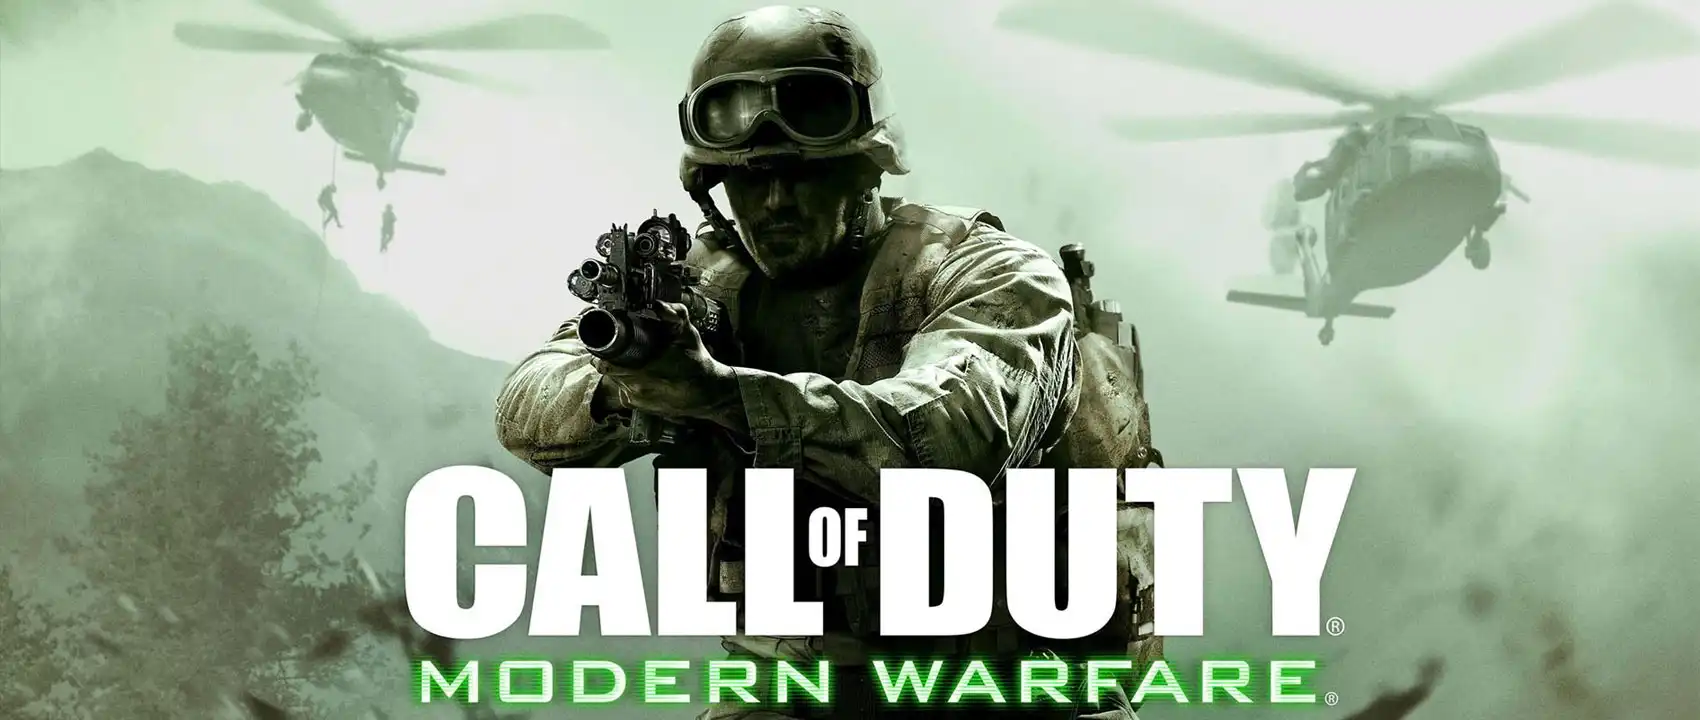 خرید بازی Call of Duty Modern Warfare Remastered